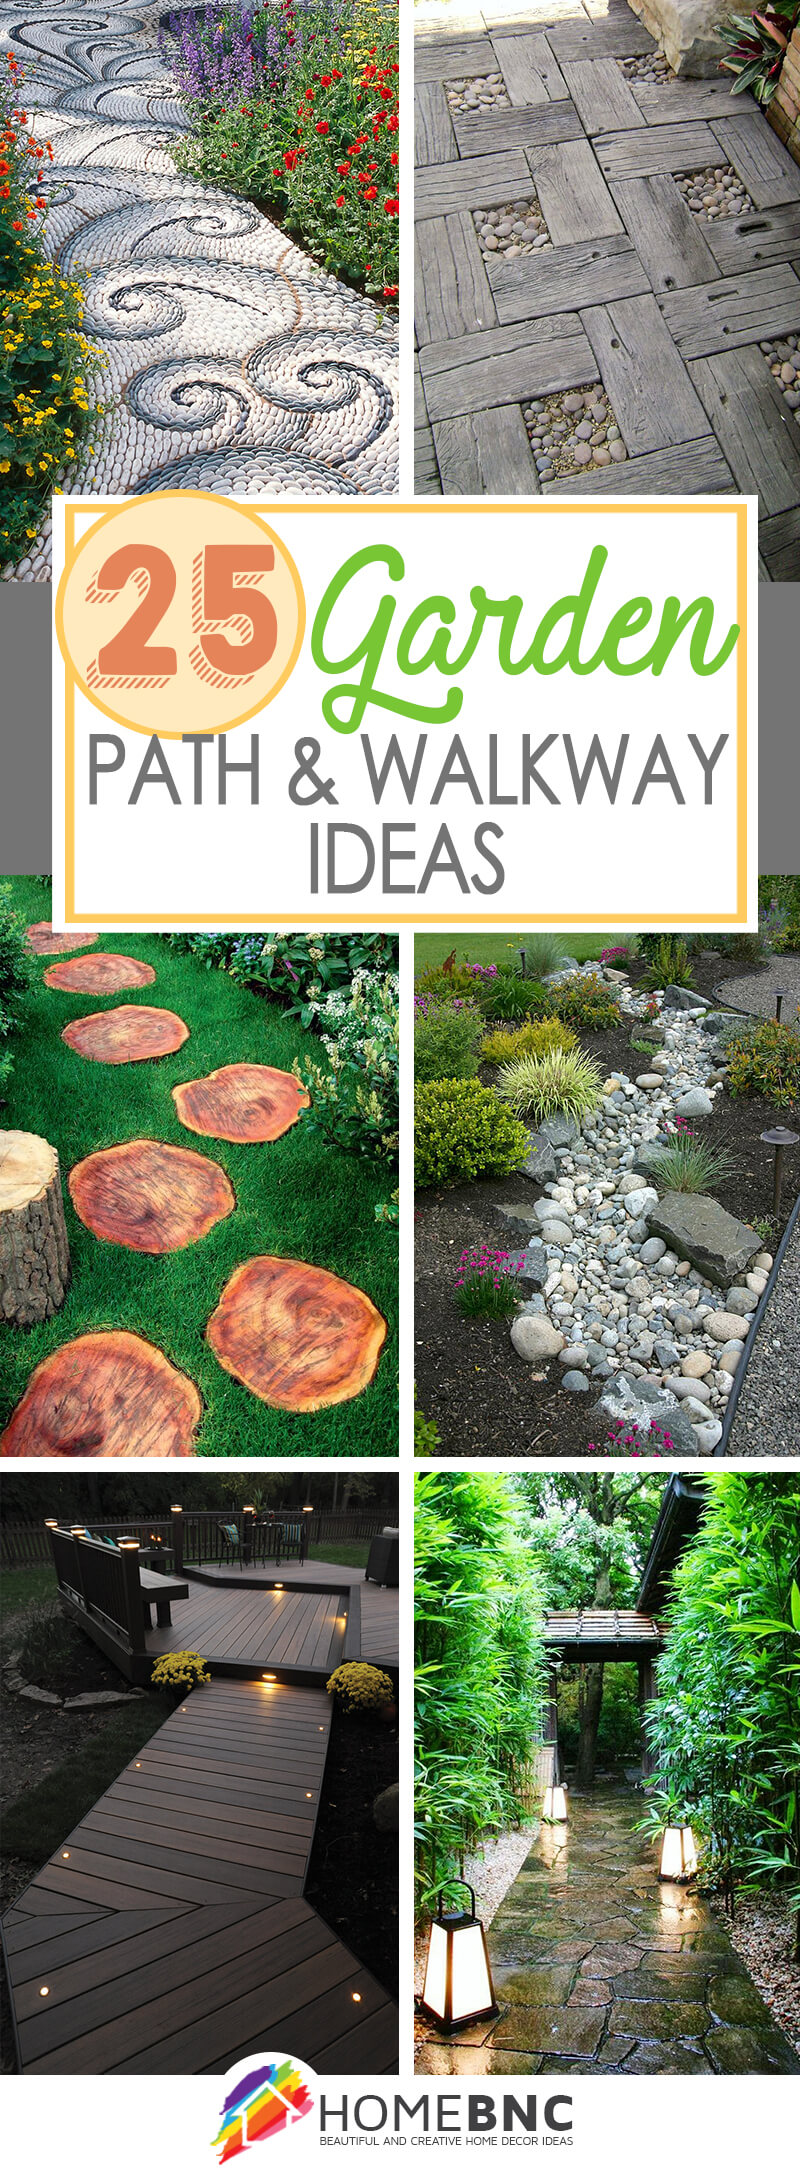 Garden Path and Walkway Designs